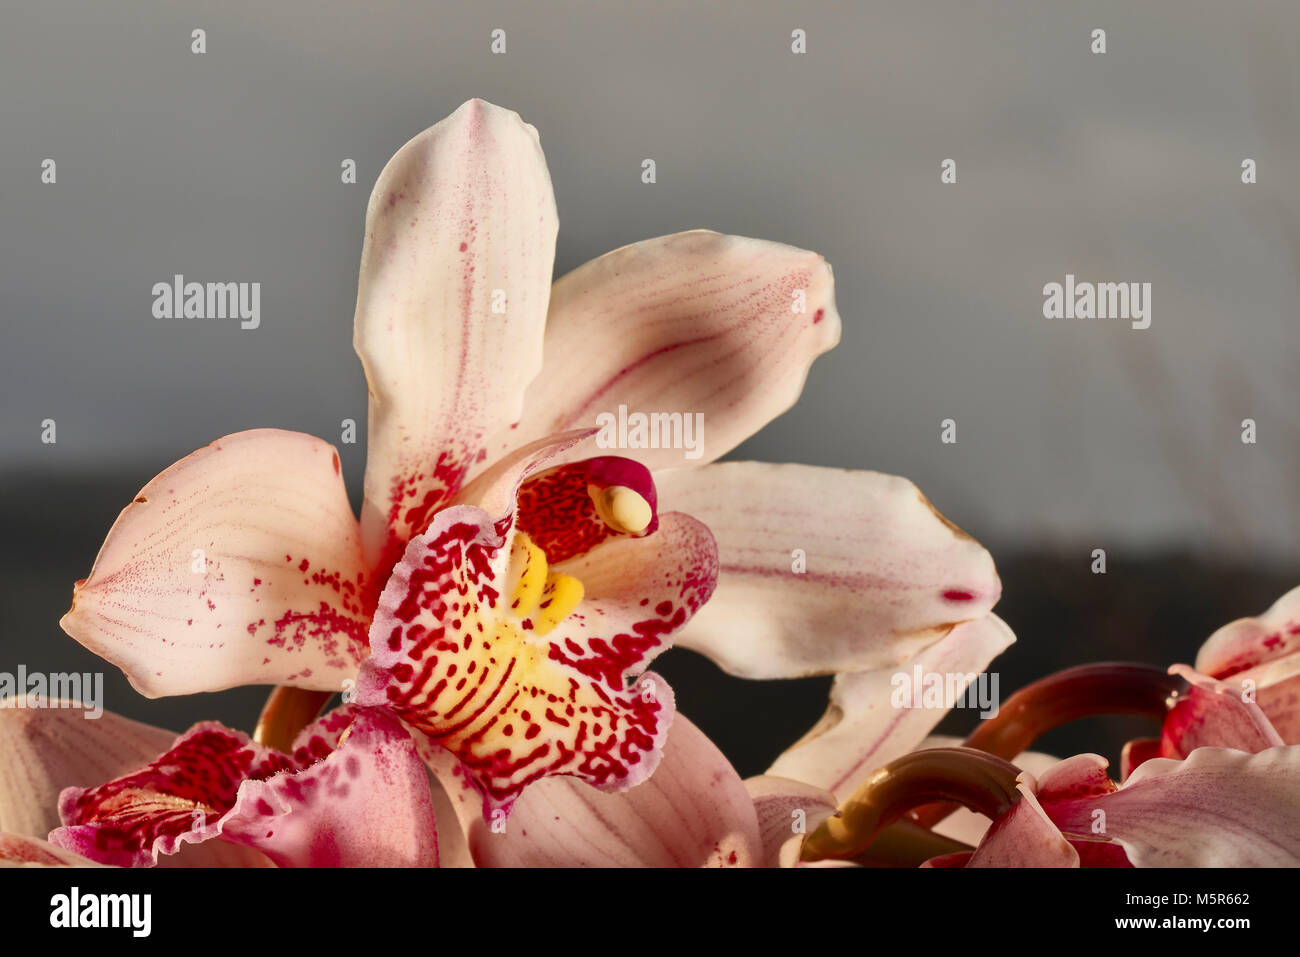 Orchidee selvatiche, Cymbidium Foto Stock